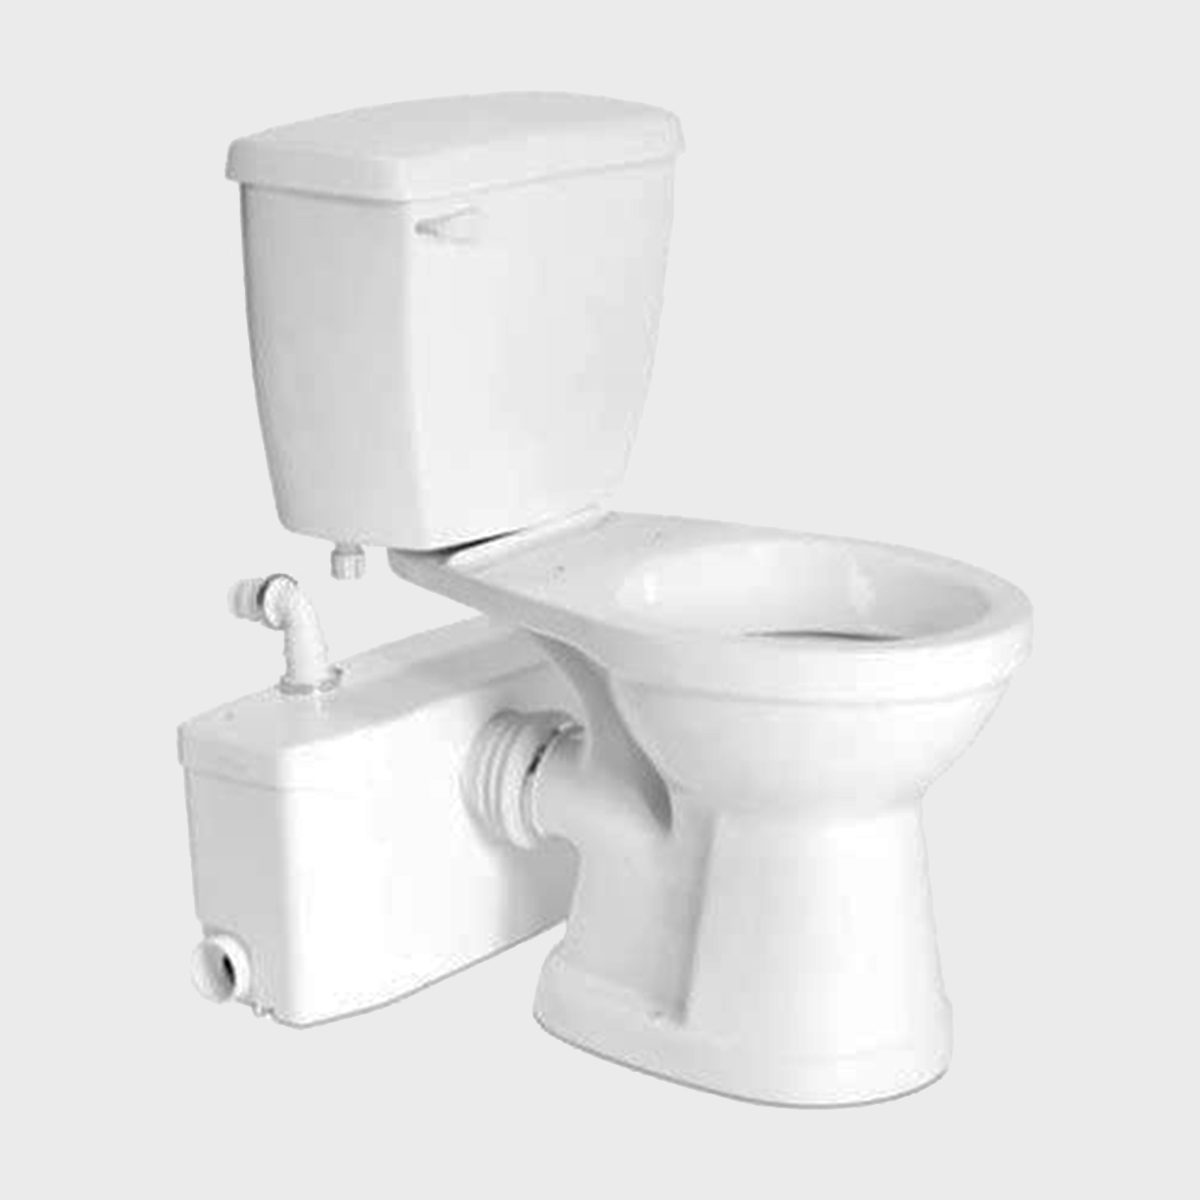 Upflush for toilet